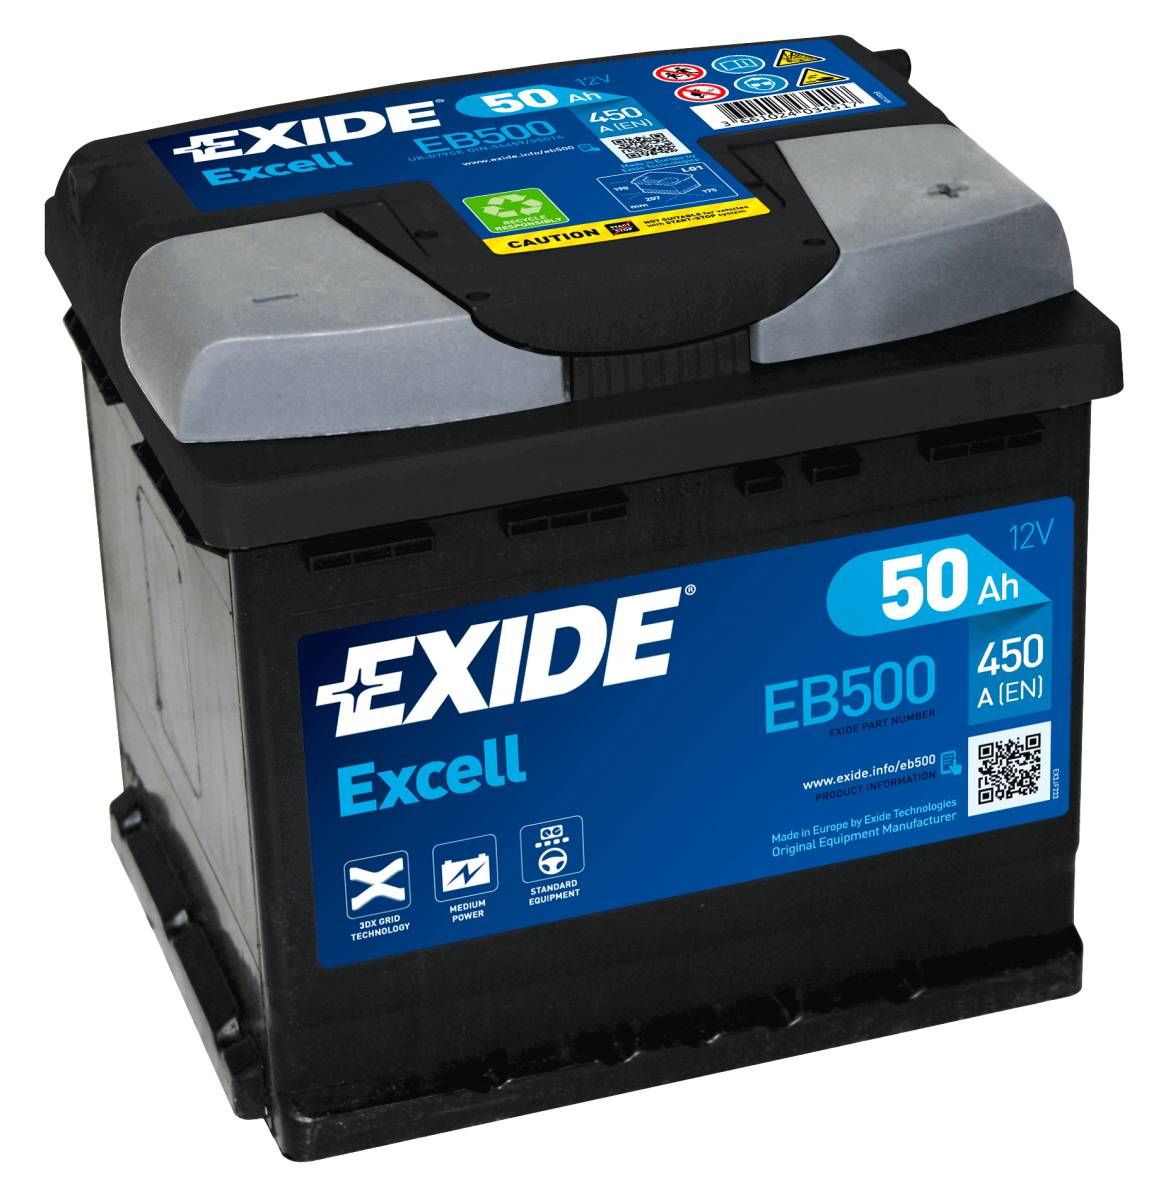 Exide EB500 Excell 12V 50Ah 450A Autobatterie, Starterbatterie, Boot, Batterien  für